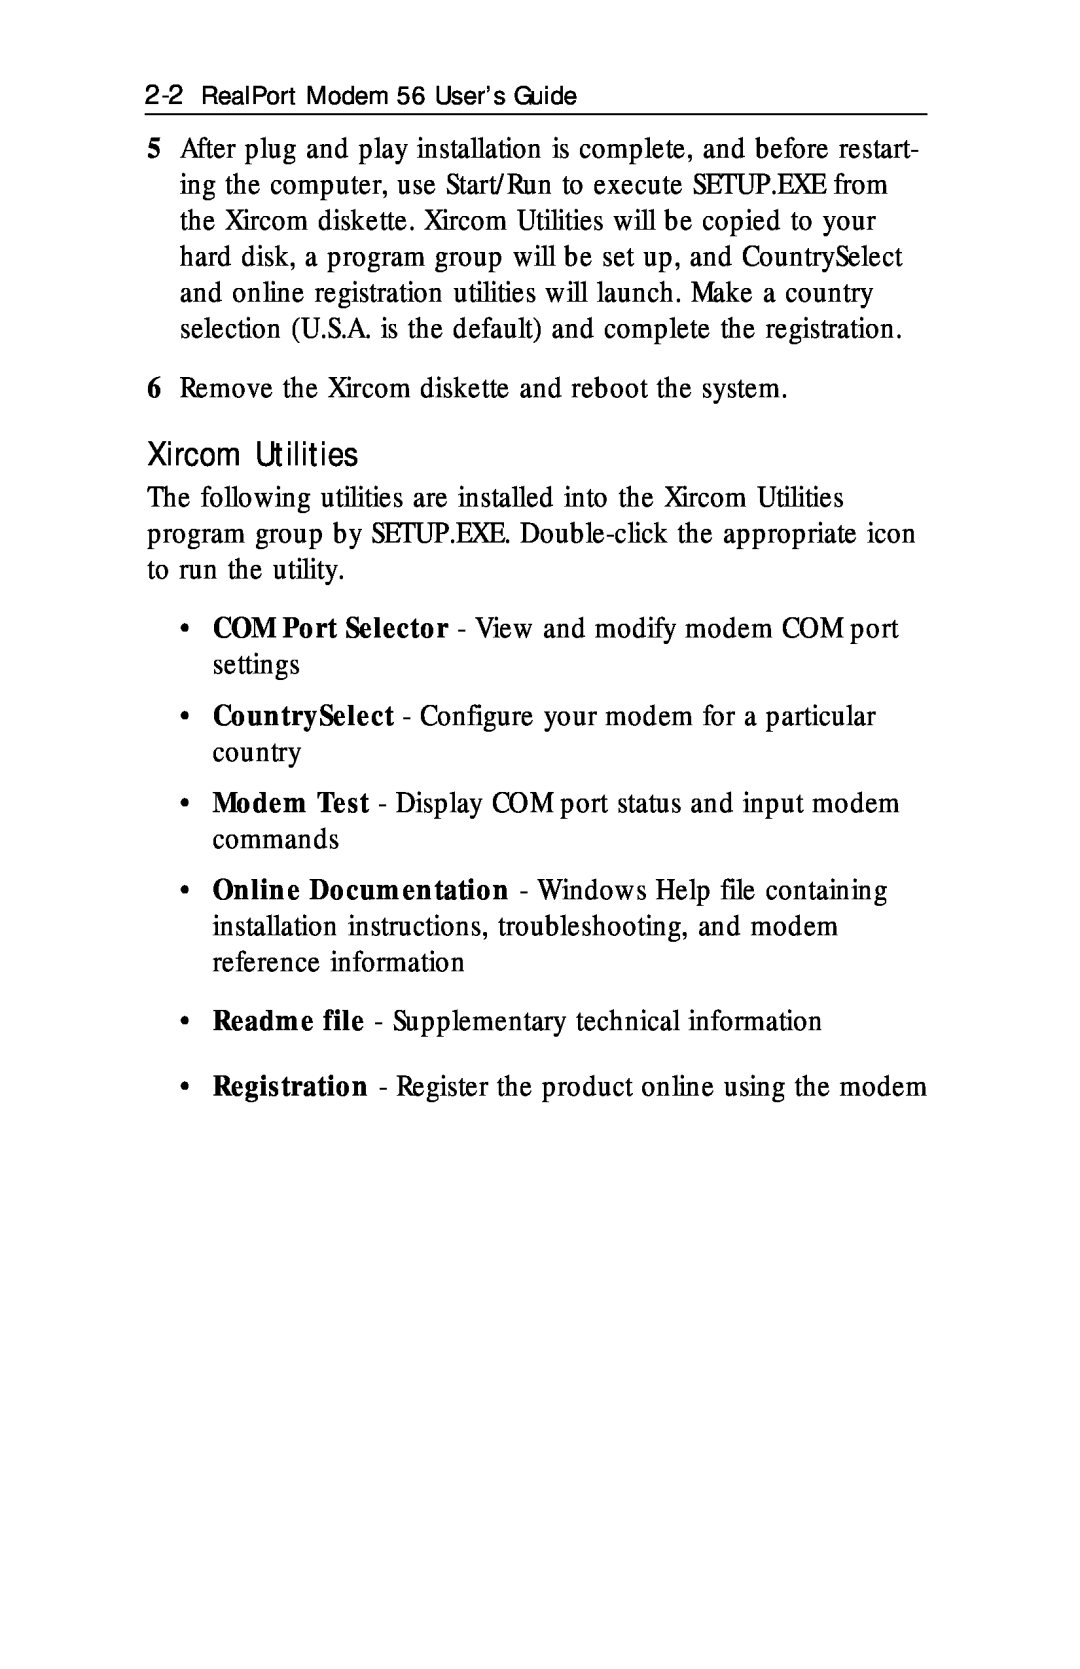 Xircom RM56V1 manual Xircom Utilities 